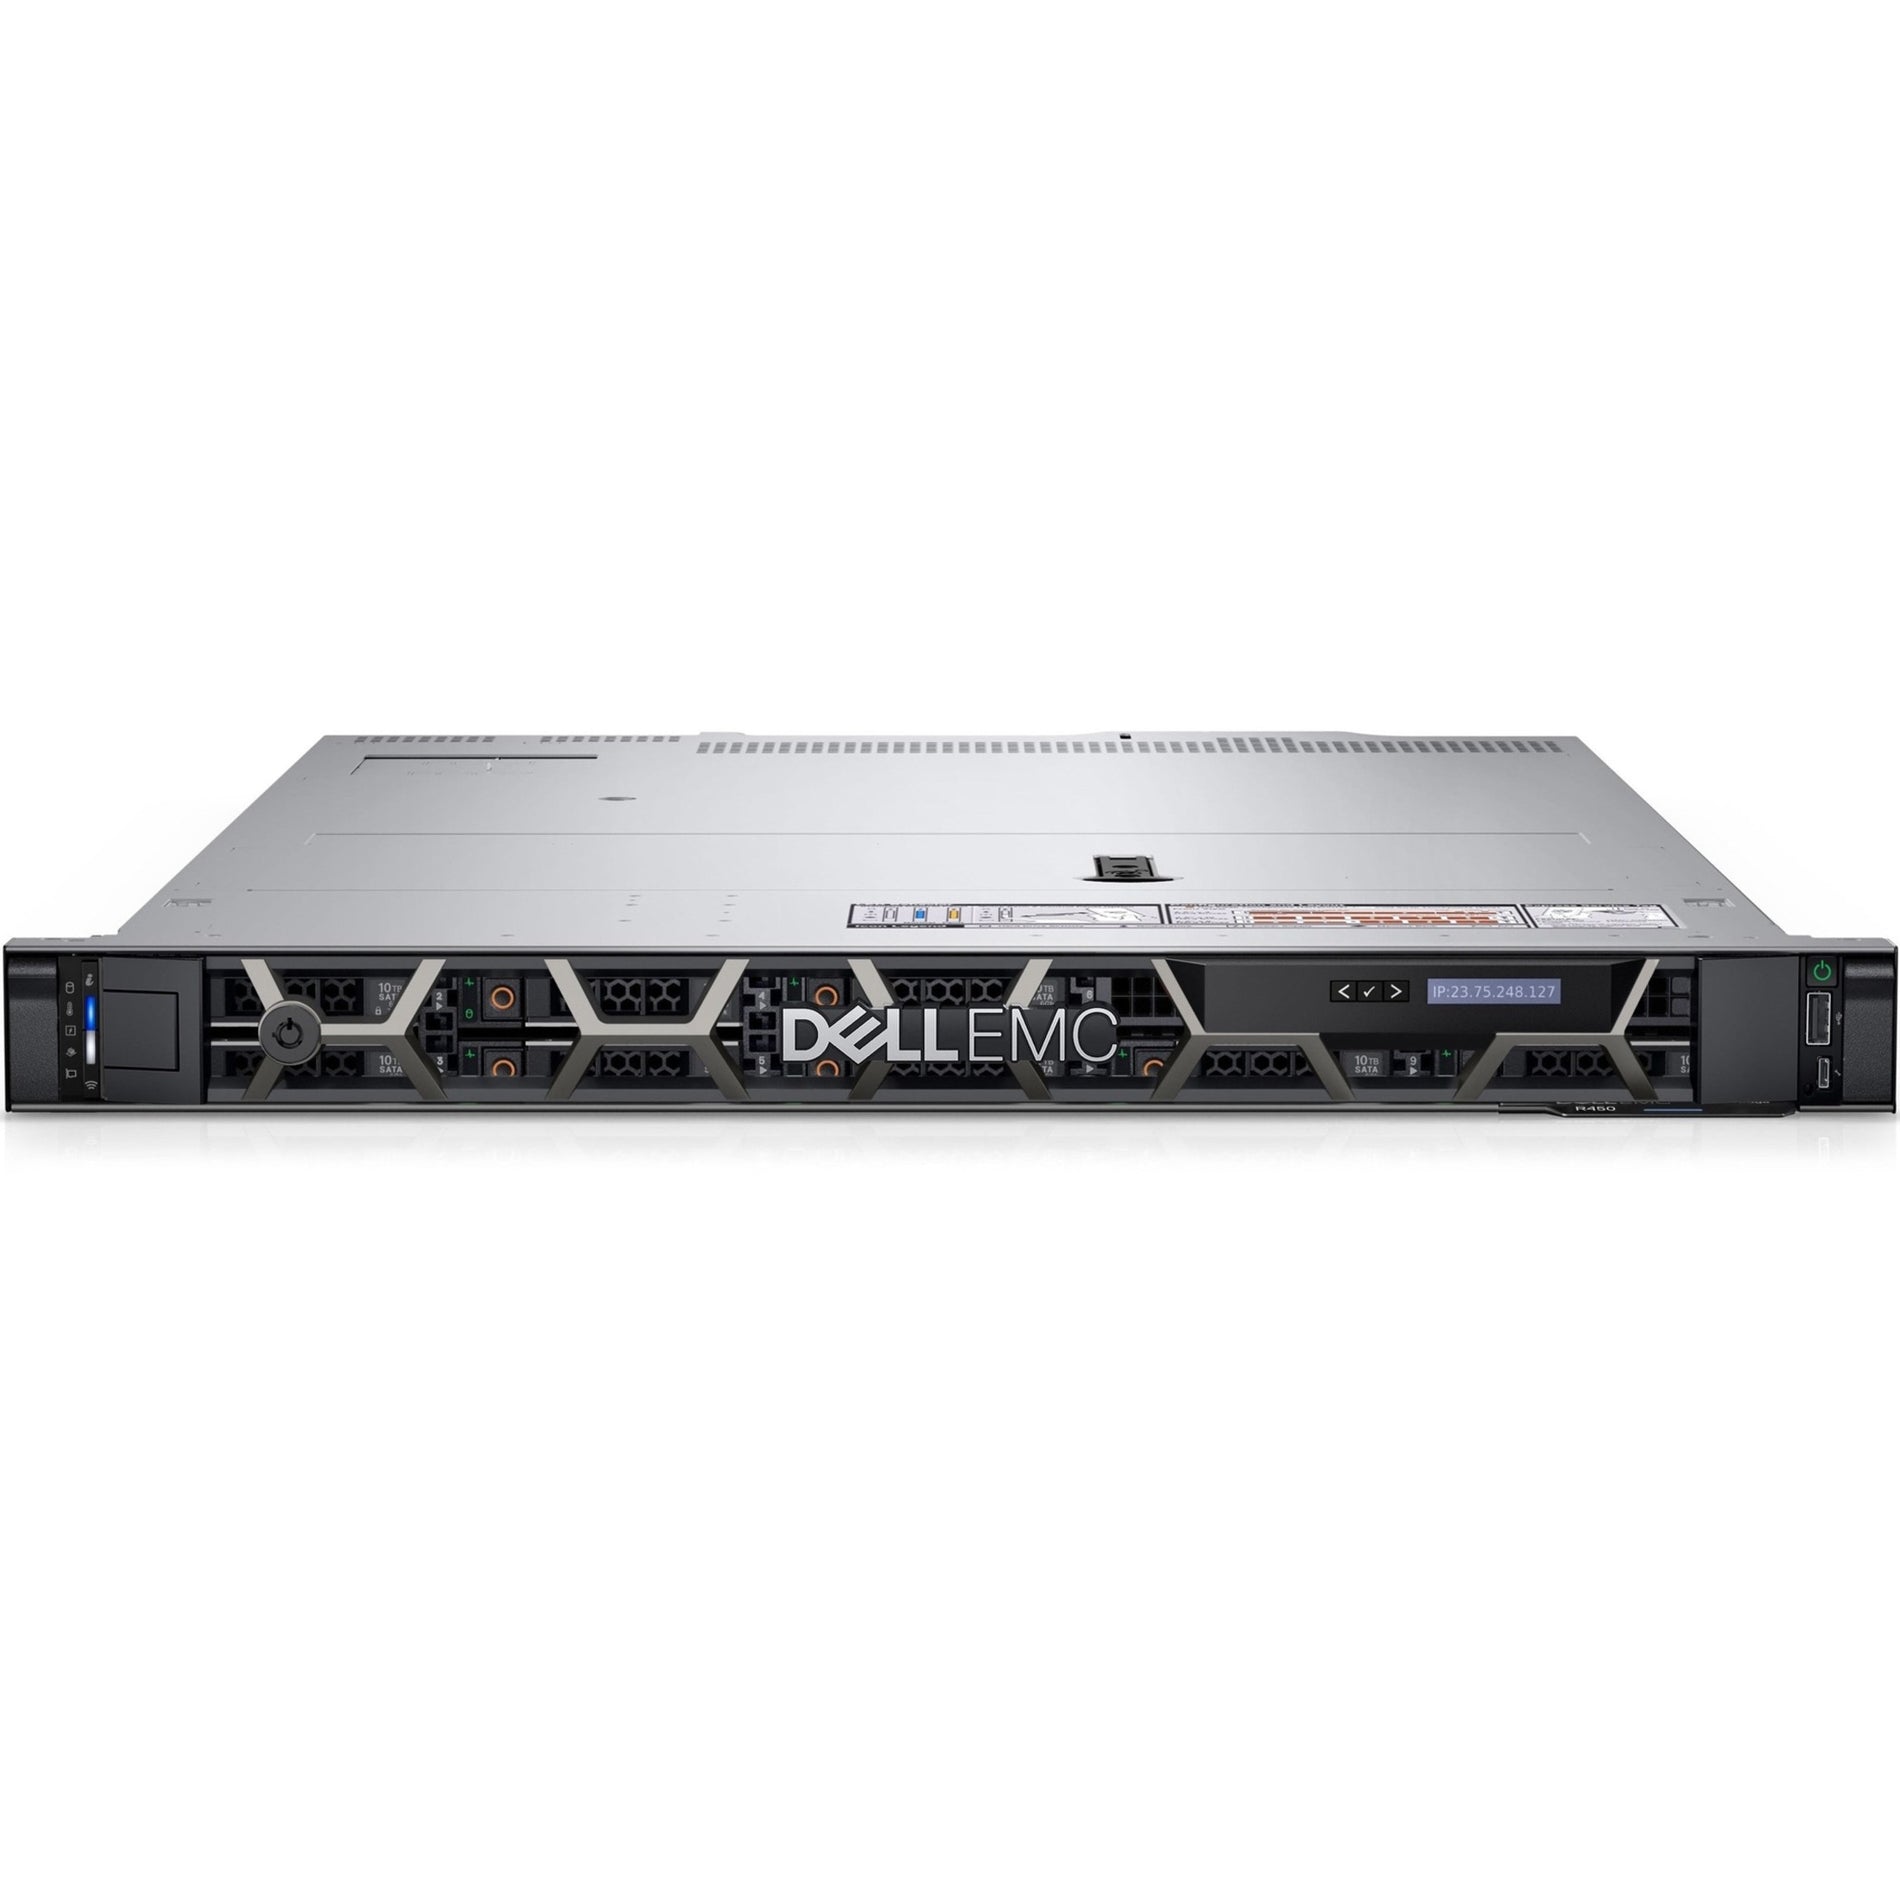 Dell EMC 9C5T8 PowerEdge R450 Server, Xeon Silver 4310, 16GB RAM, 480GB SSD, 2.1GHz, 12 Core